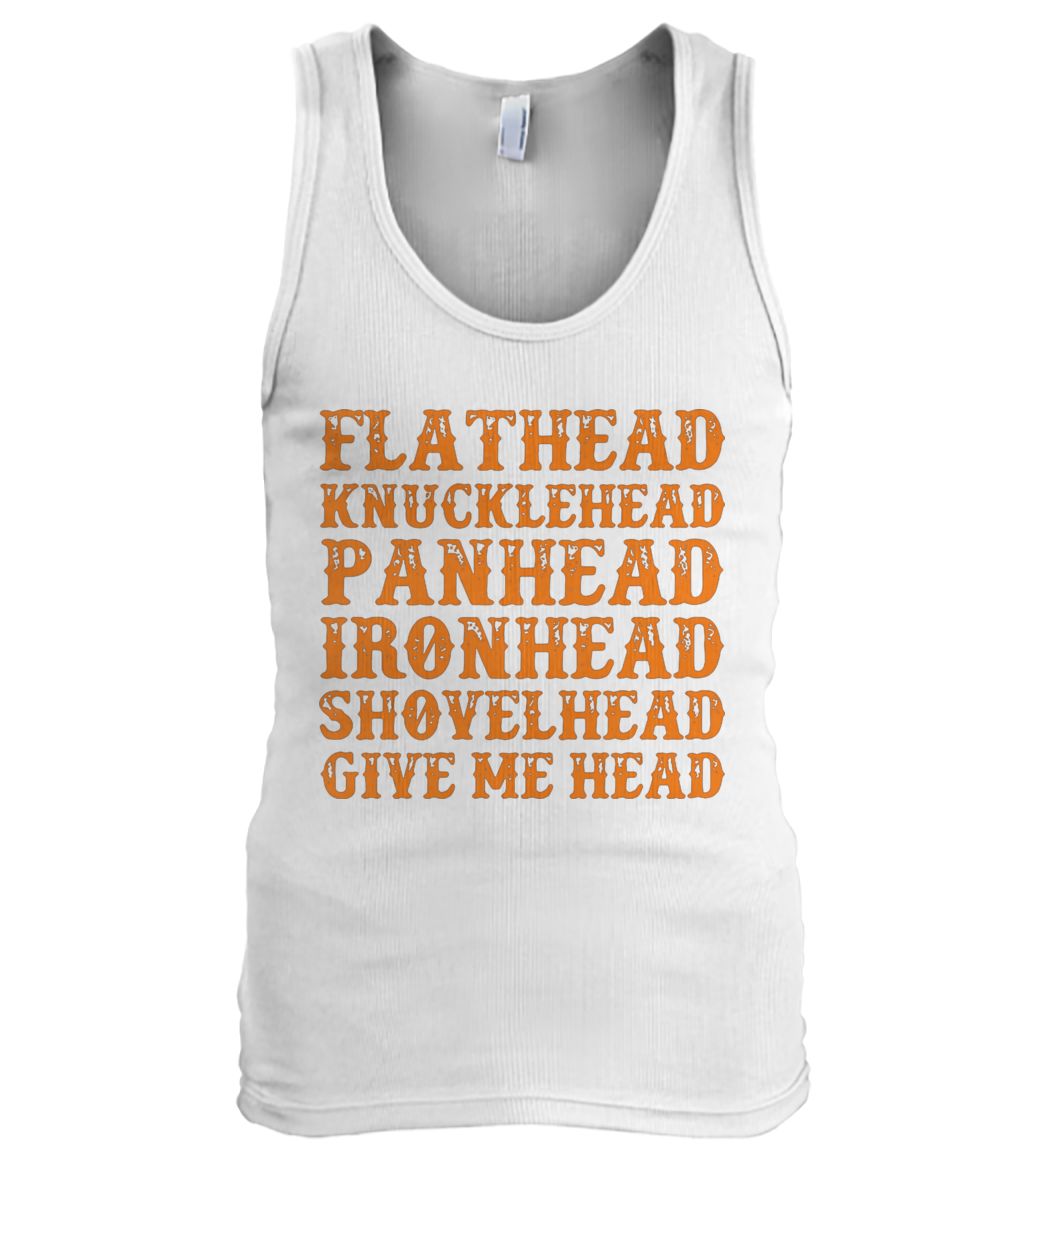 Flathead knucklehead panhead ironhead shovelhead give me head men's tank top